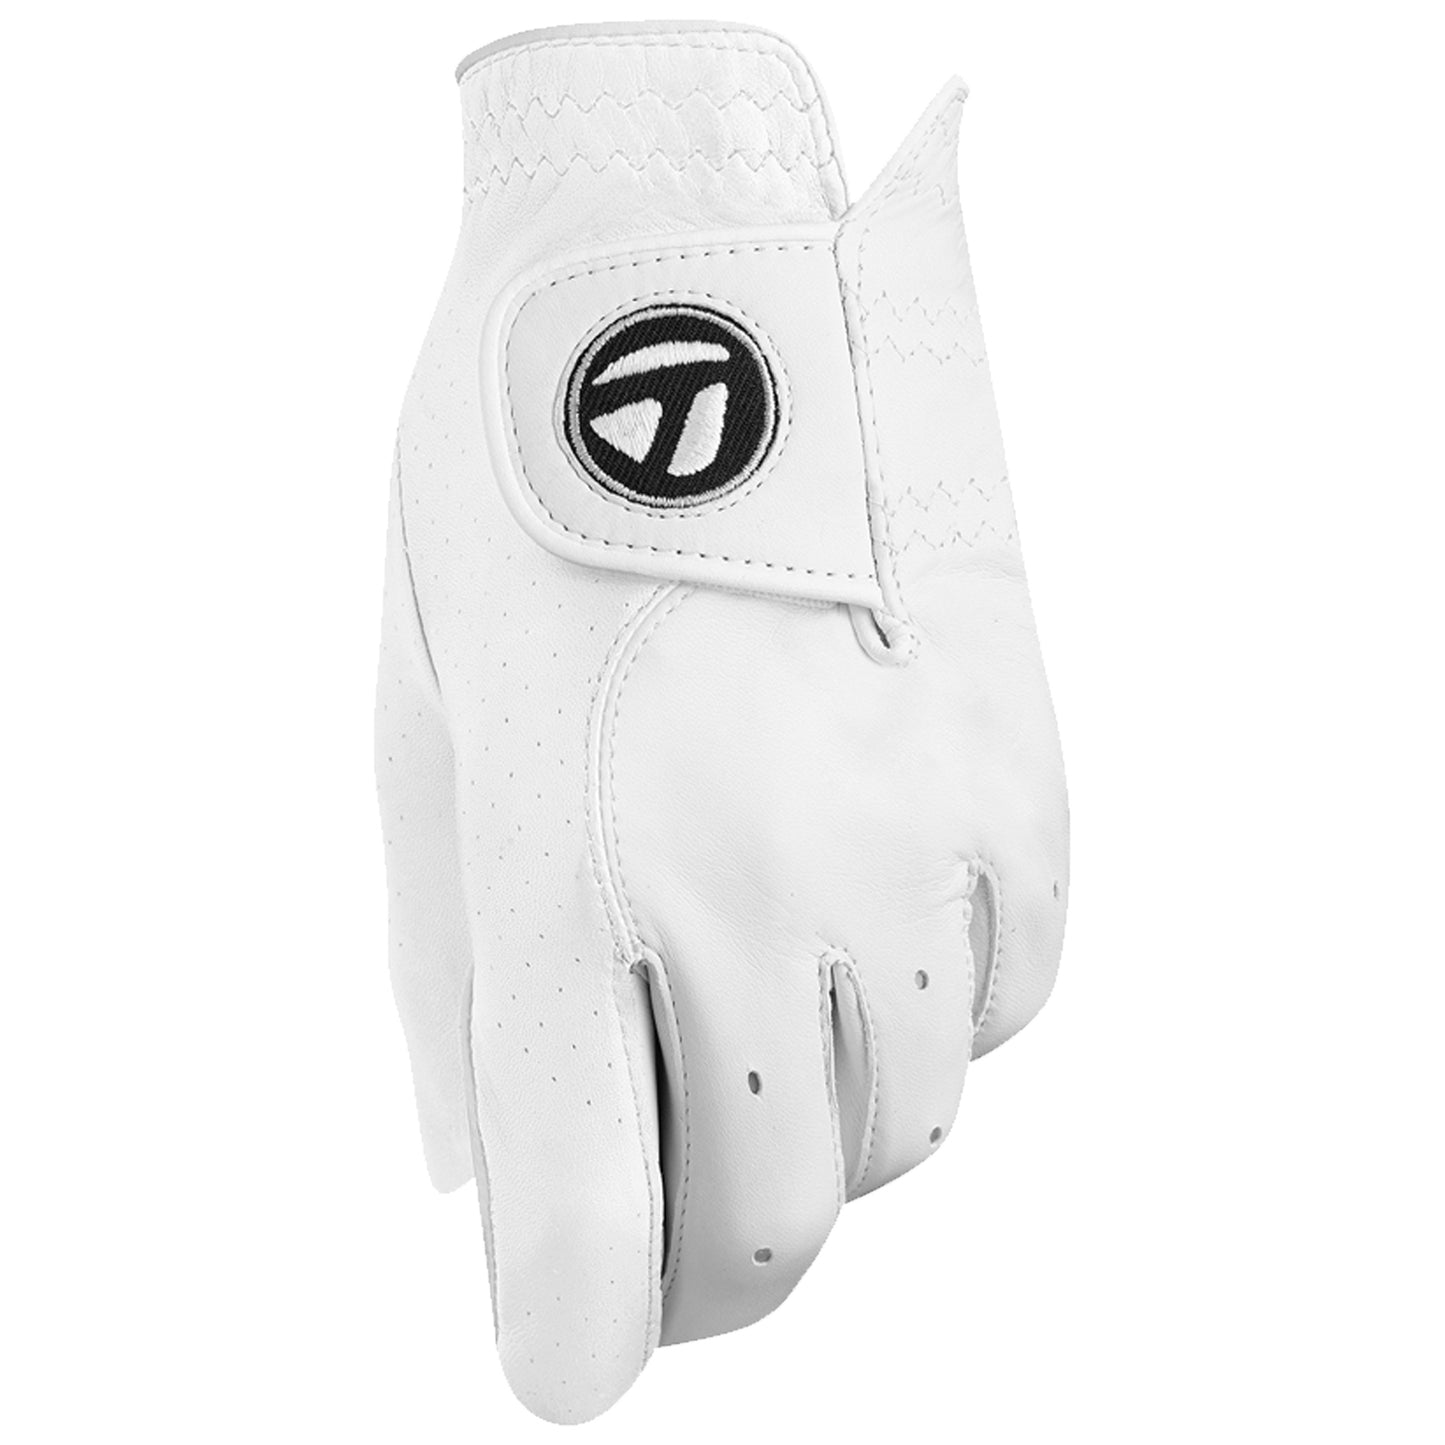 TaylorMade Ladies Left Hand Tour Preferred Golf Glove